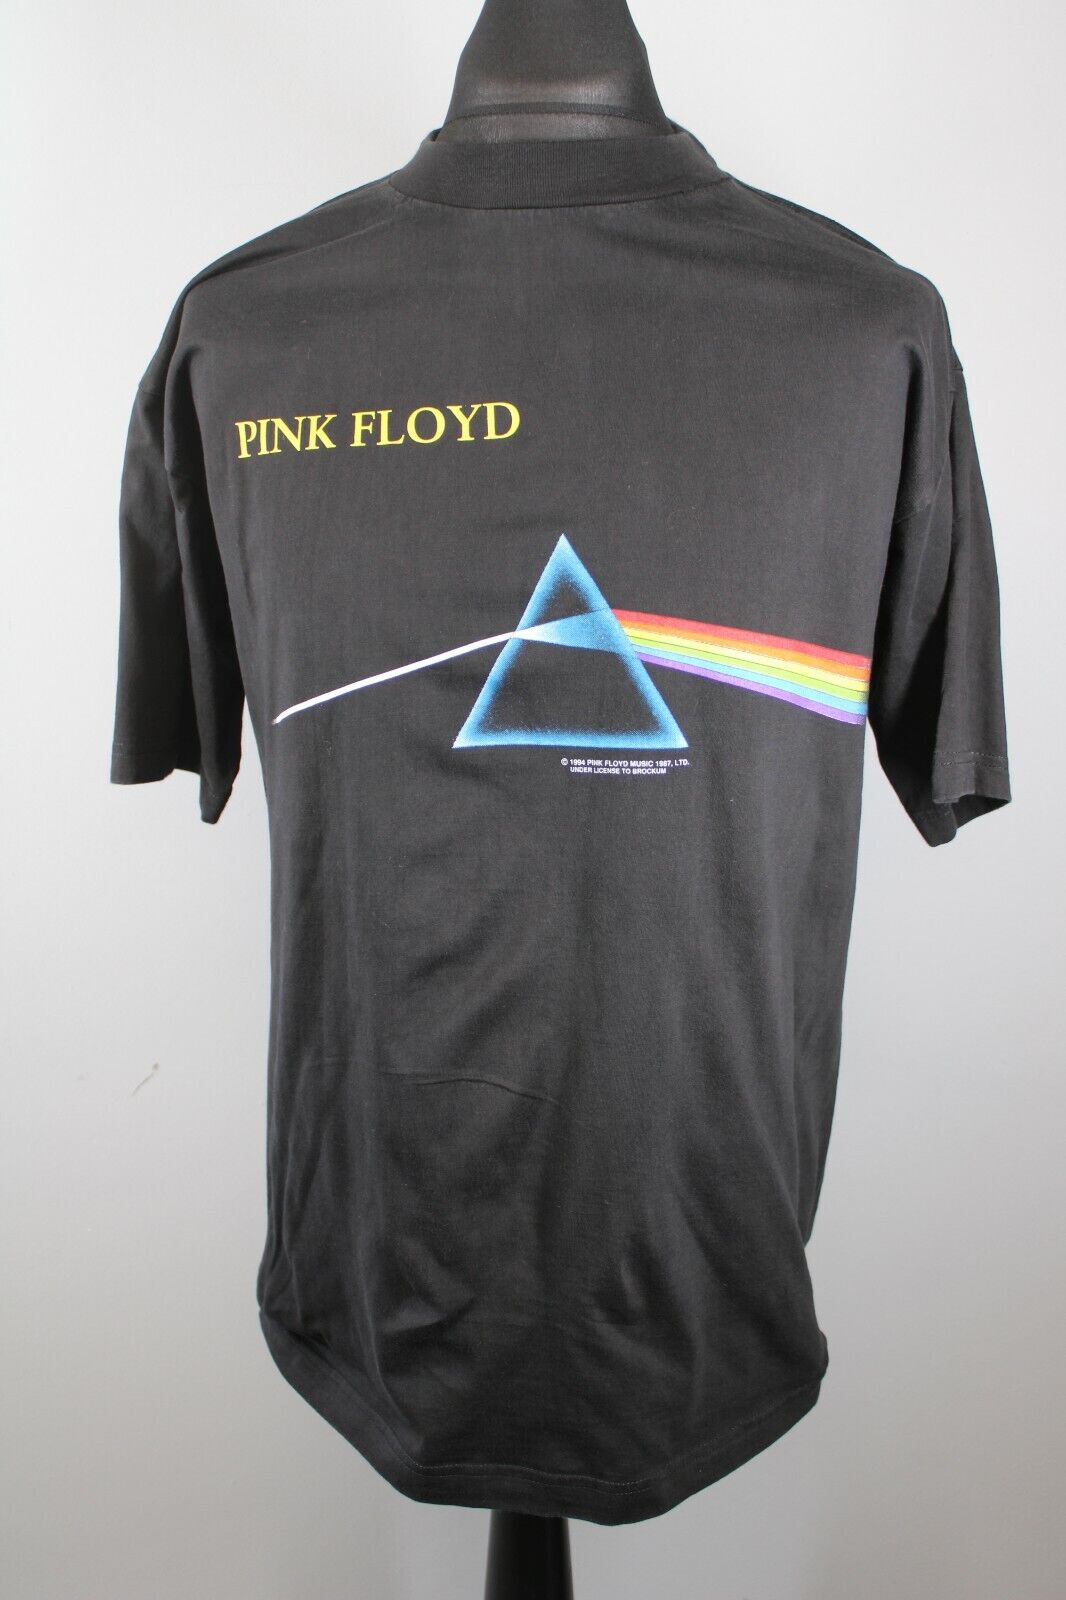 Pink Floyd Shirt Division Bell Roger Waters Original Vintage European Tour 1994